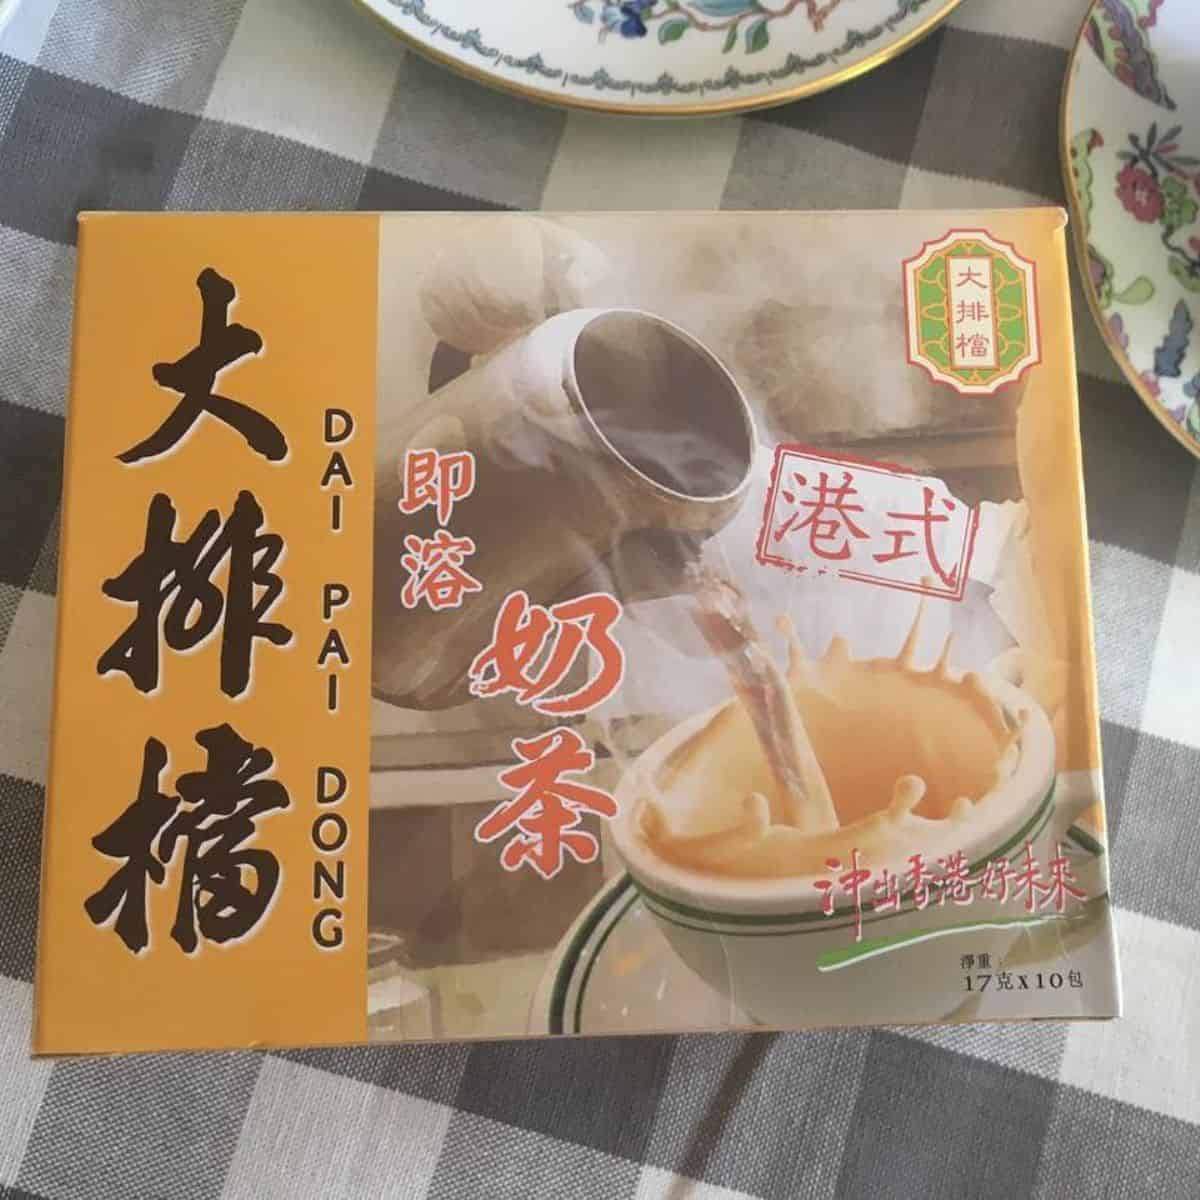 Dai Pai Dong milk tea powder box on the table